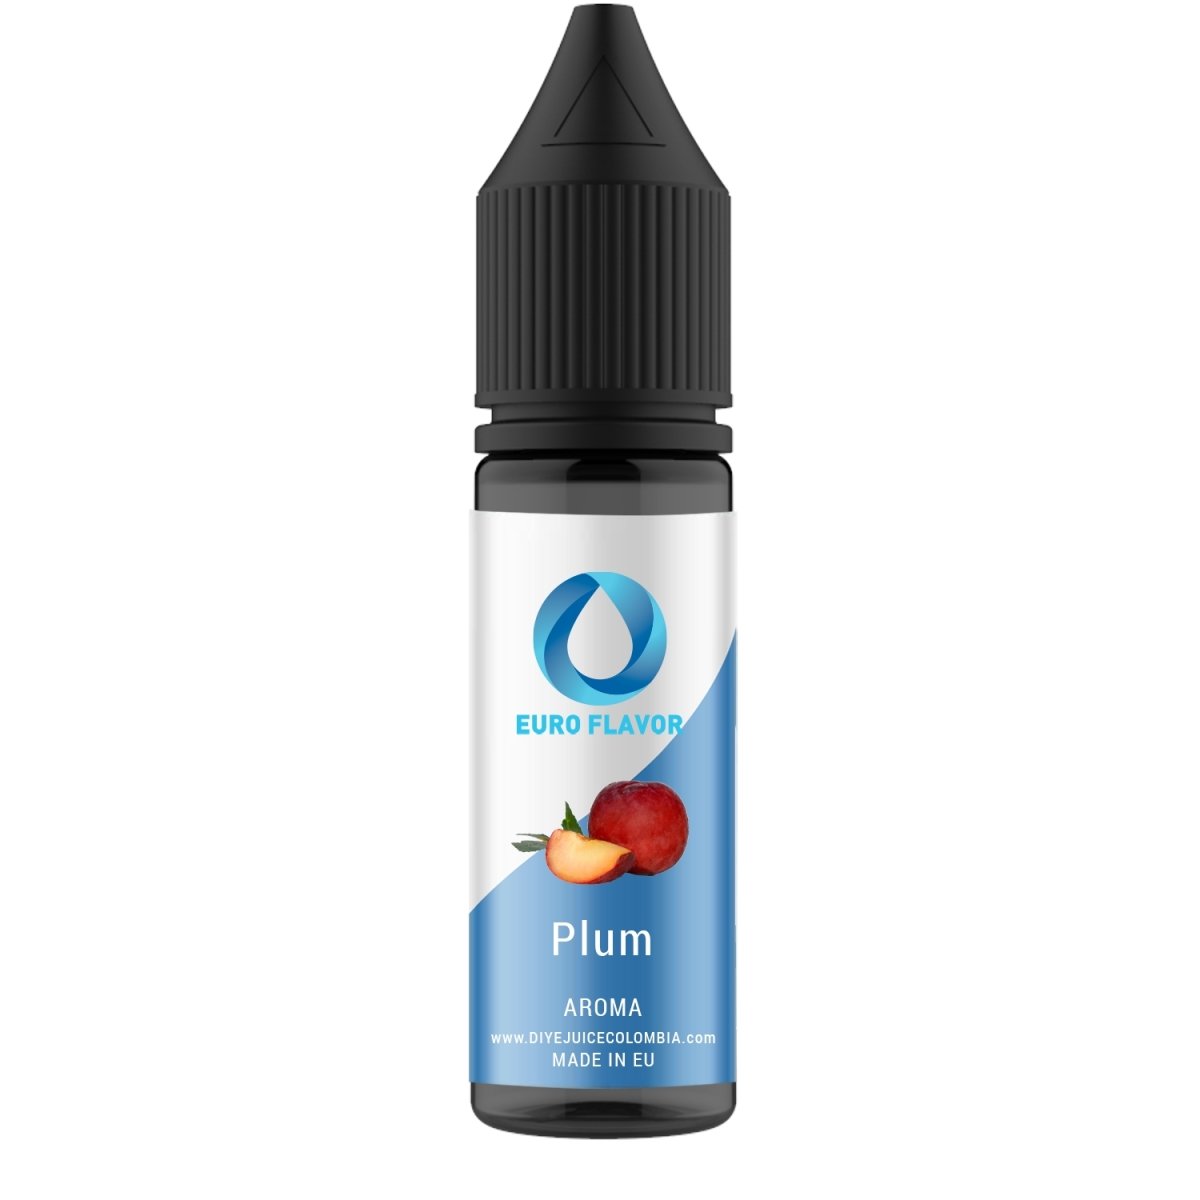 Plum EF - Aroma - Euro Flavor | AR-EF-PLU